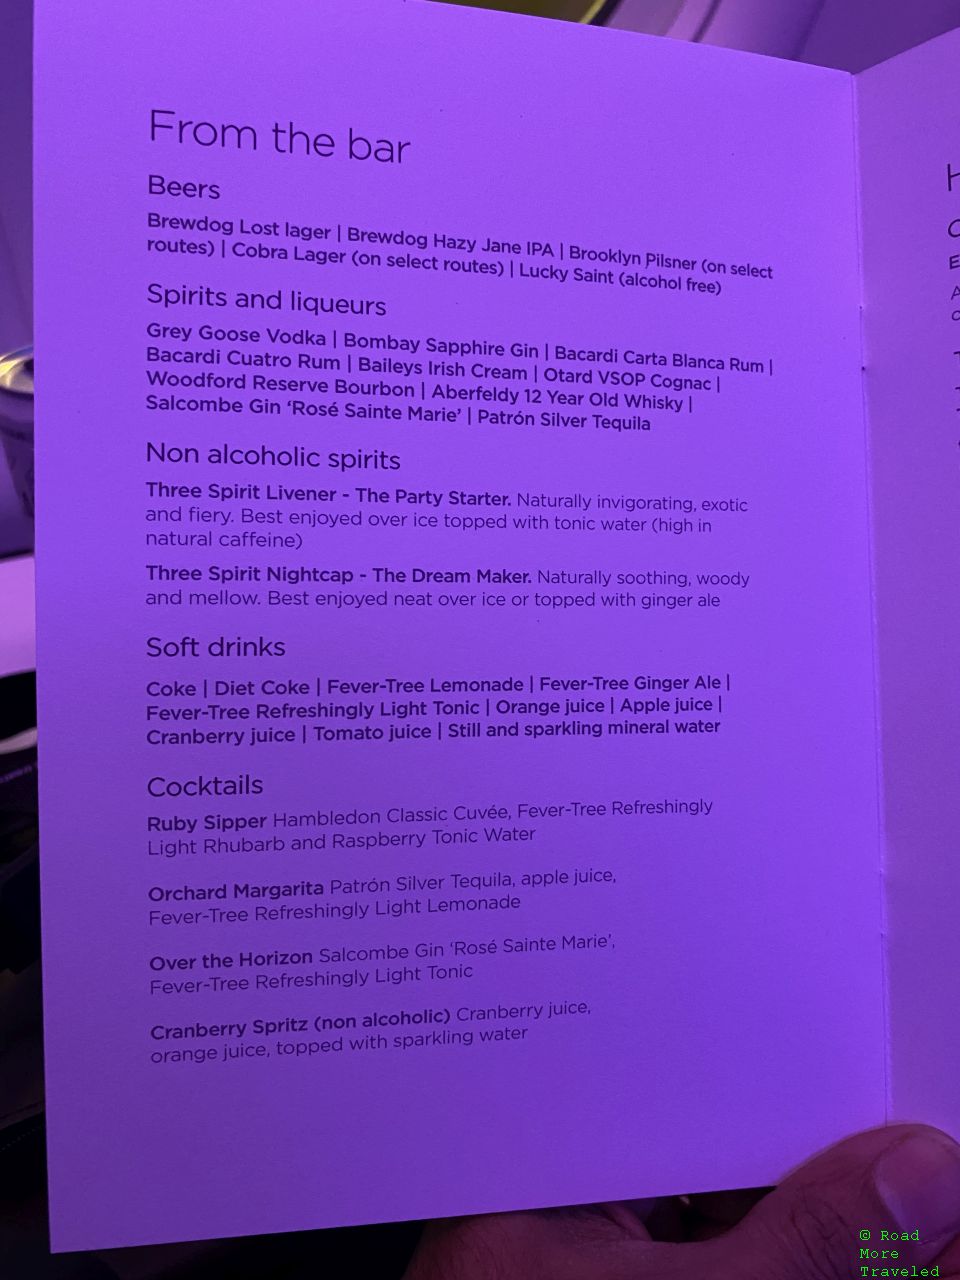 Virgin Atlantic Upper Class cold drinks menu